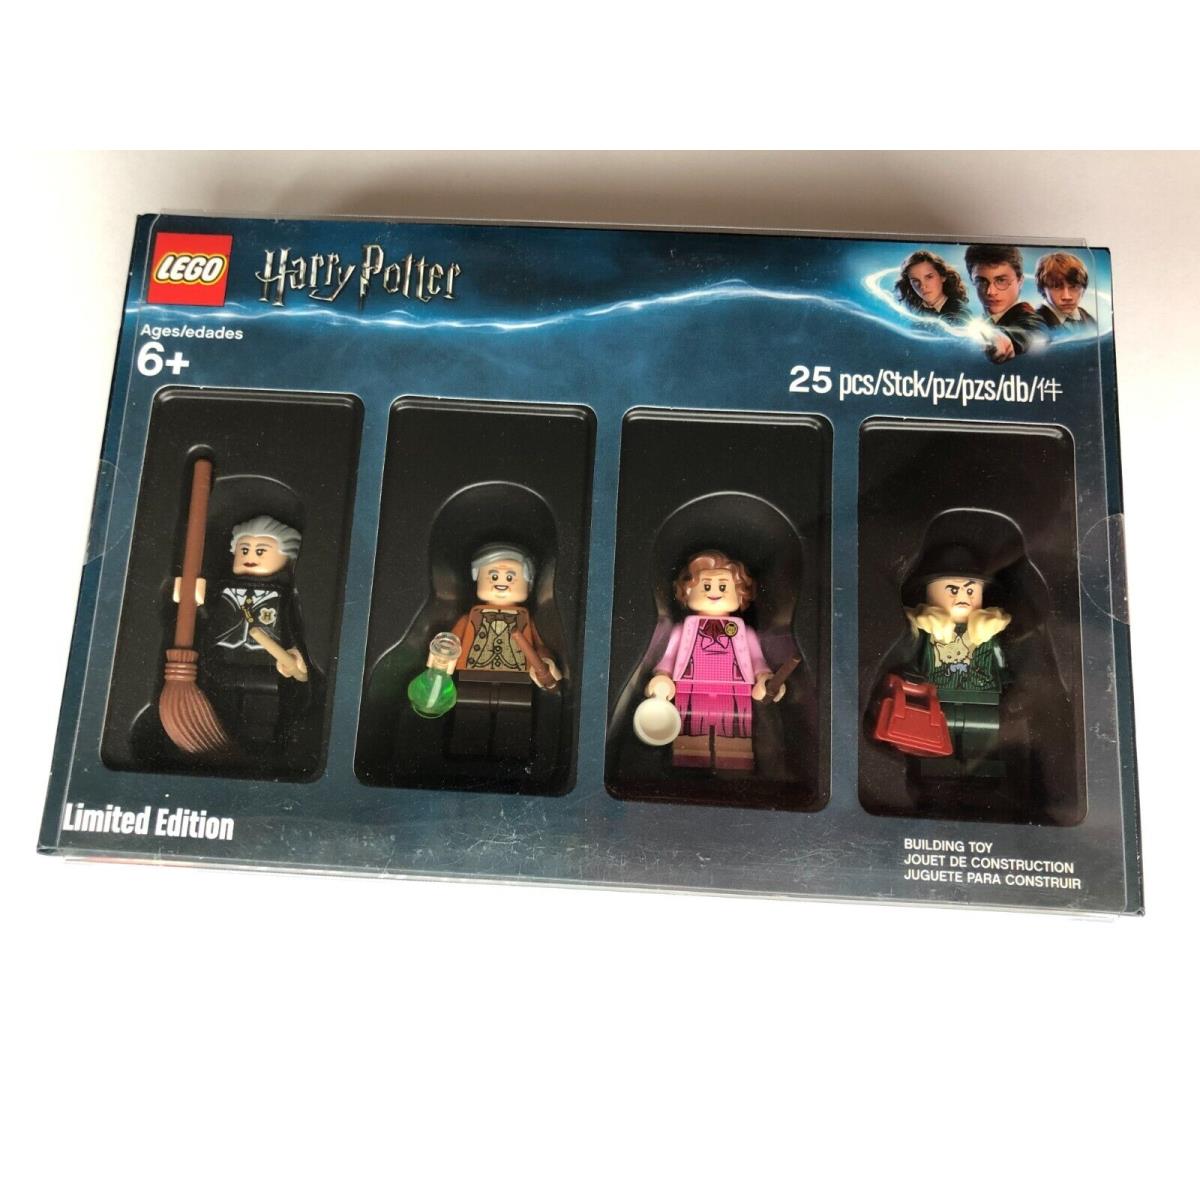 Lego Harry Potter 2018 Bricktober Limited Edition Minifigure Set 5005254